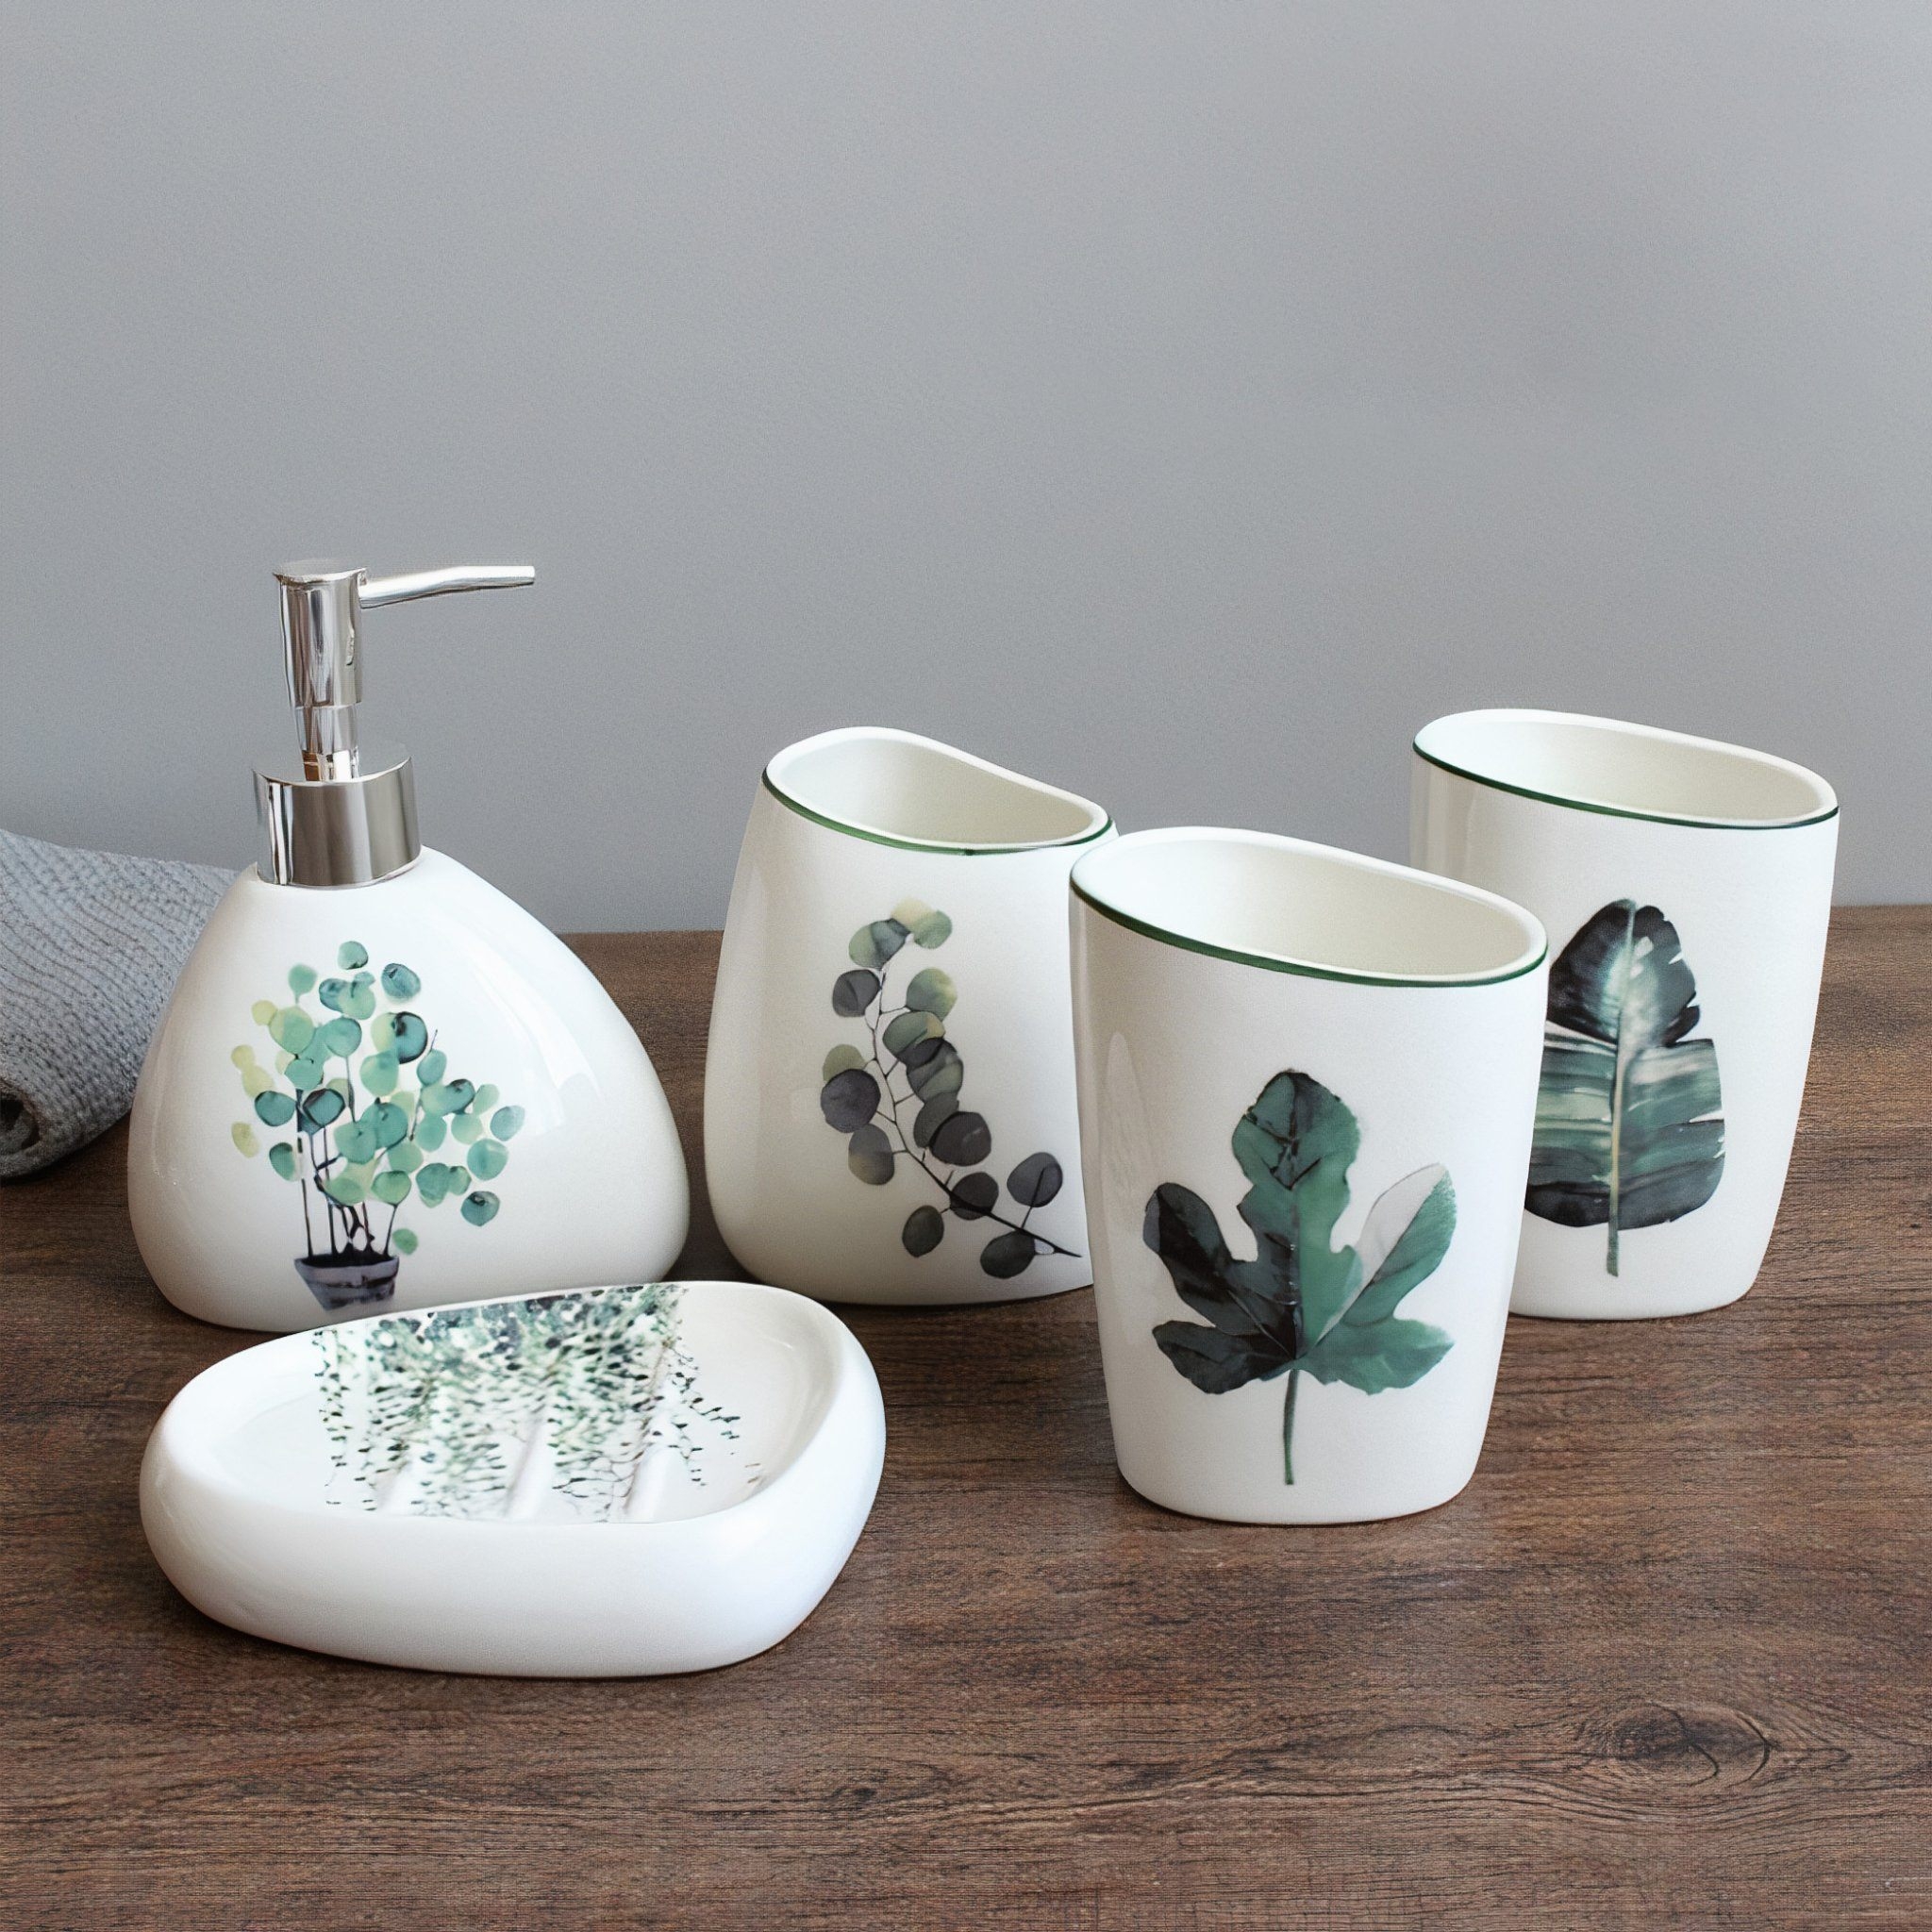 Botanical Sink Accessories – Set 1 – Dispenser / X3 Pots / Soap Dish – White / Green – Ceramic – The Trouvailles